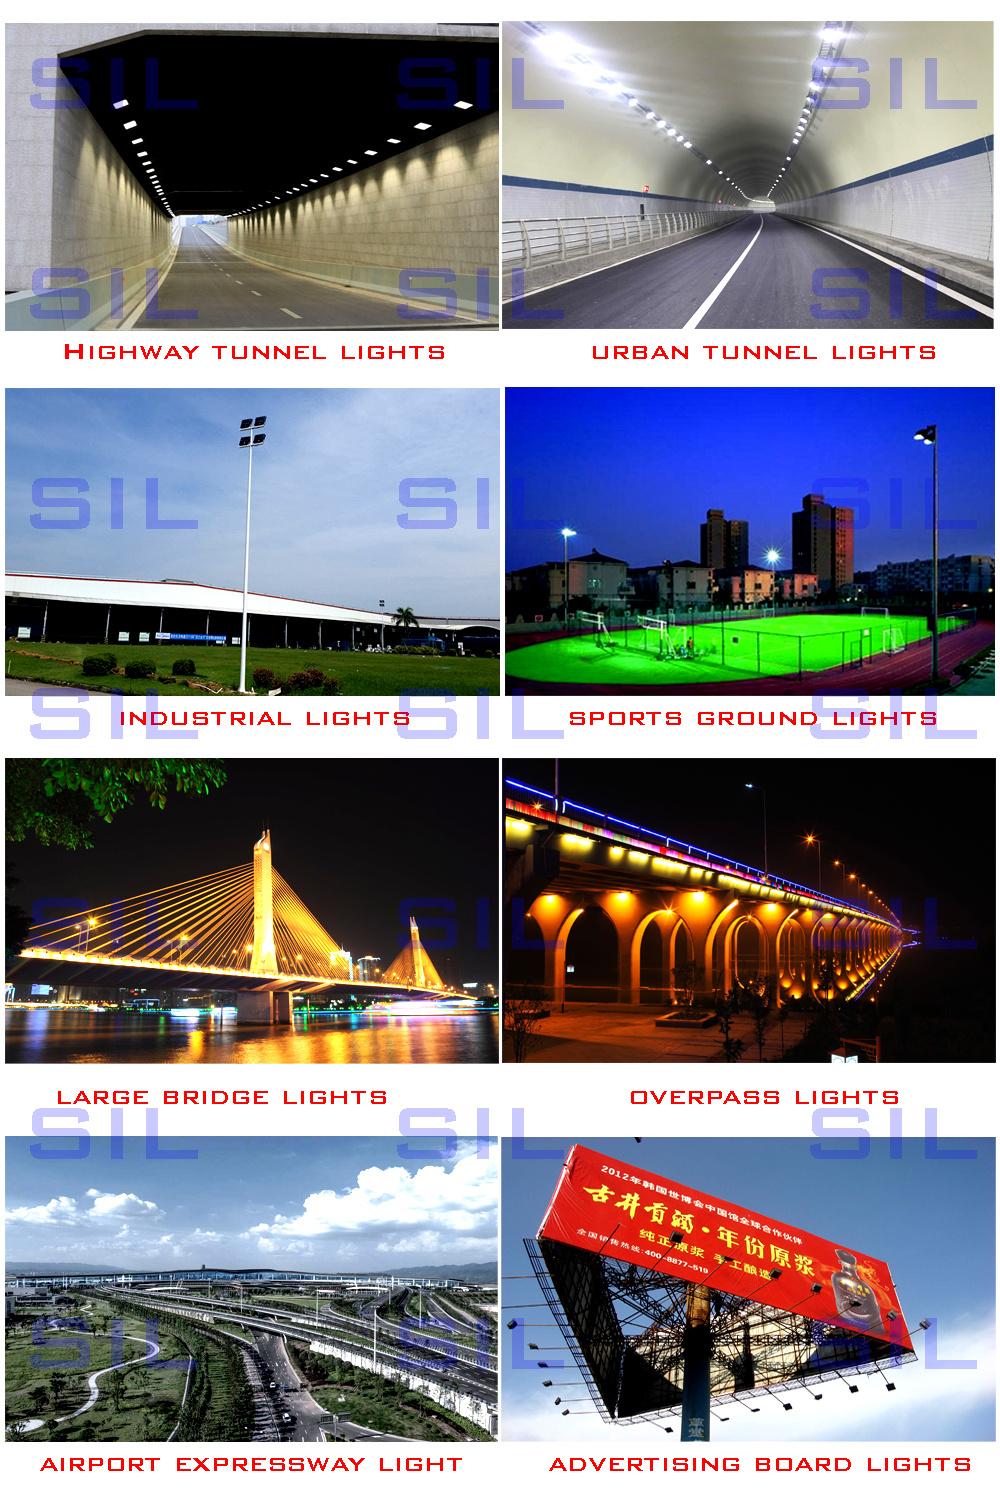 Hot Sales Wholesale Price LED Stadium Flood Light Outdoor CE RoHS 100W LED Floodlight